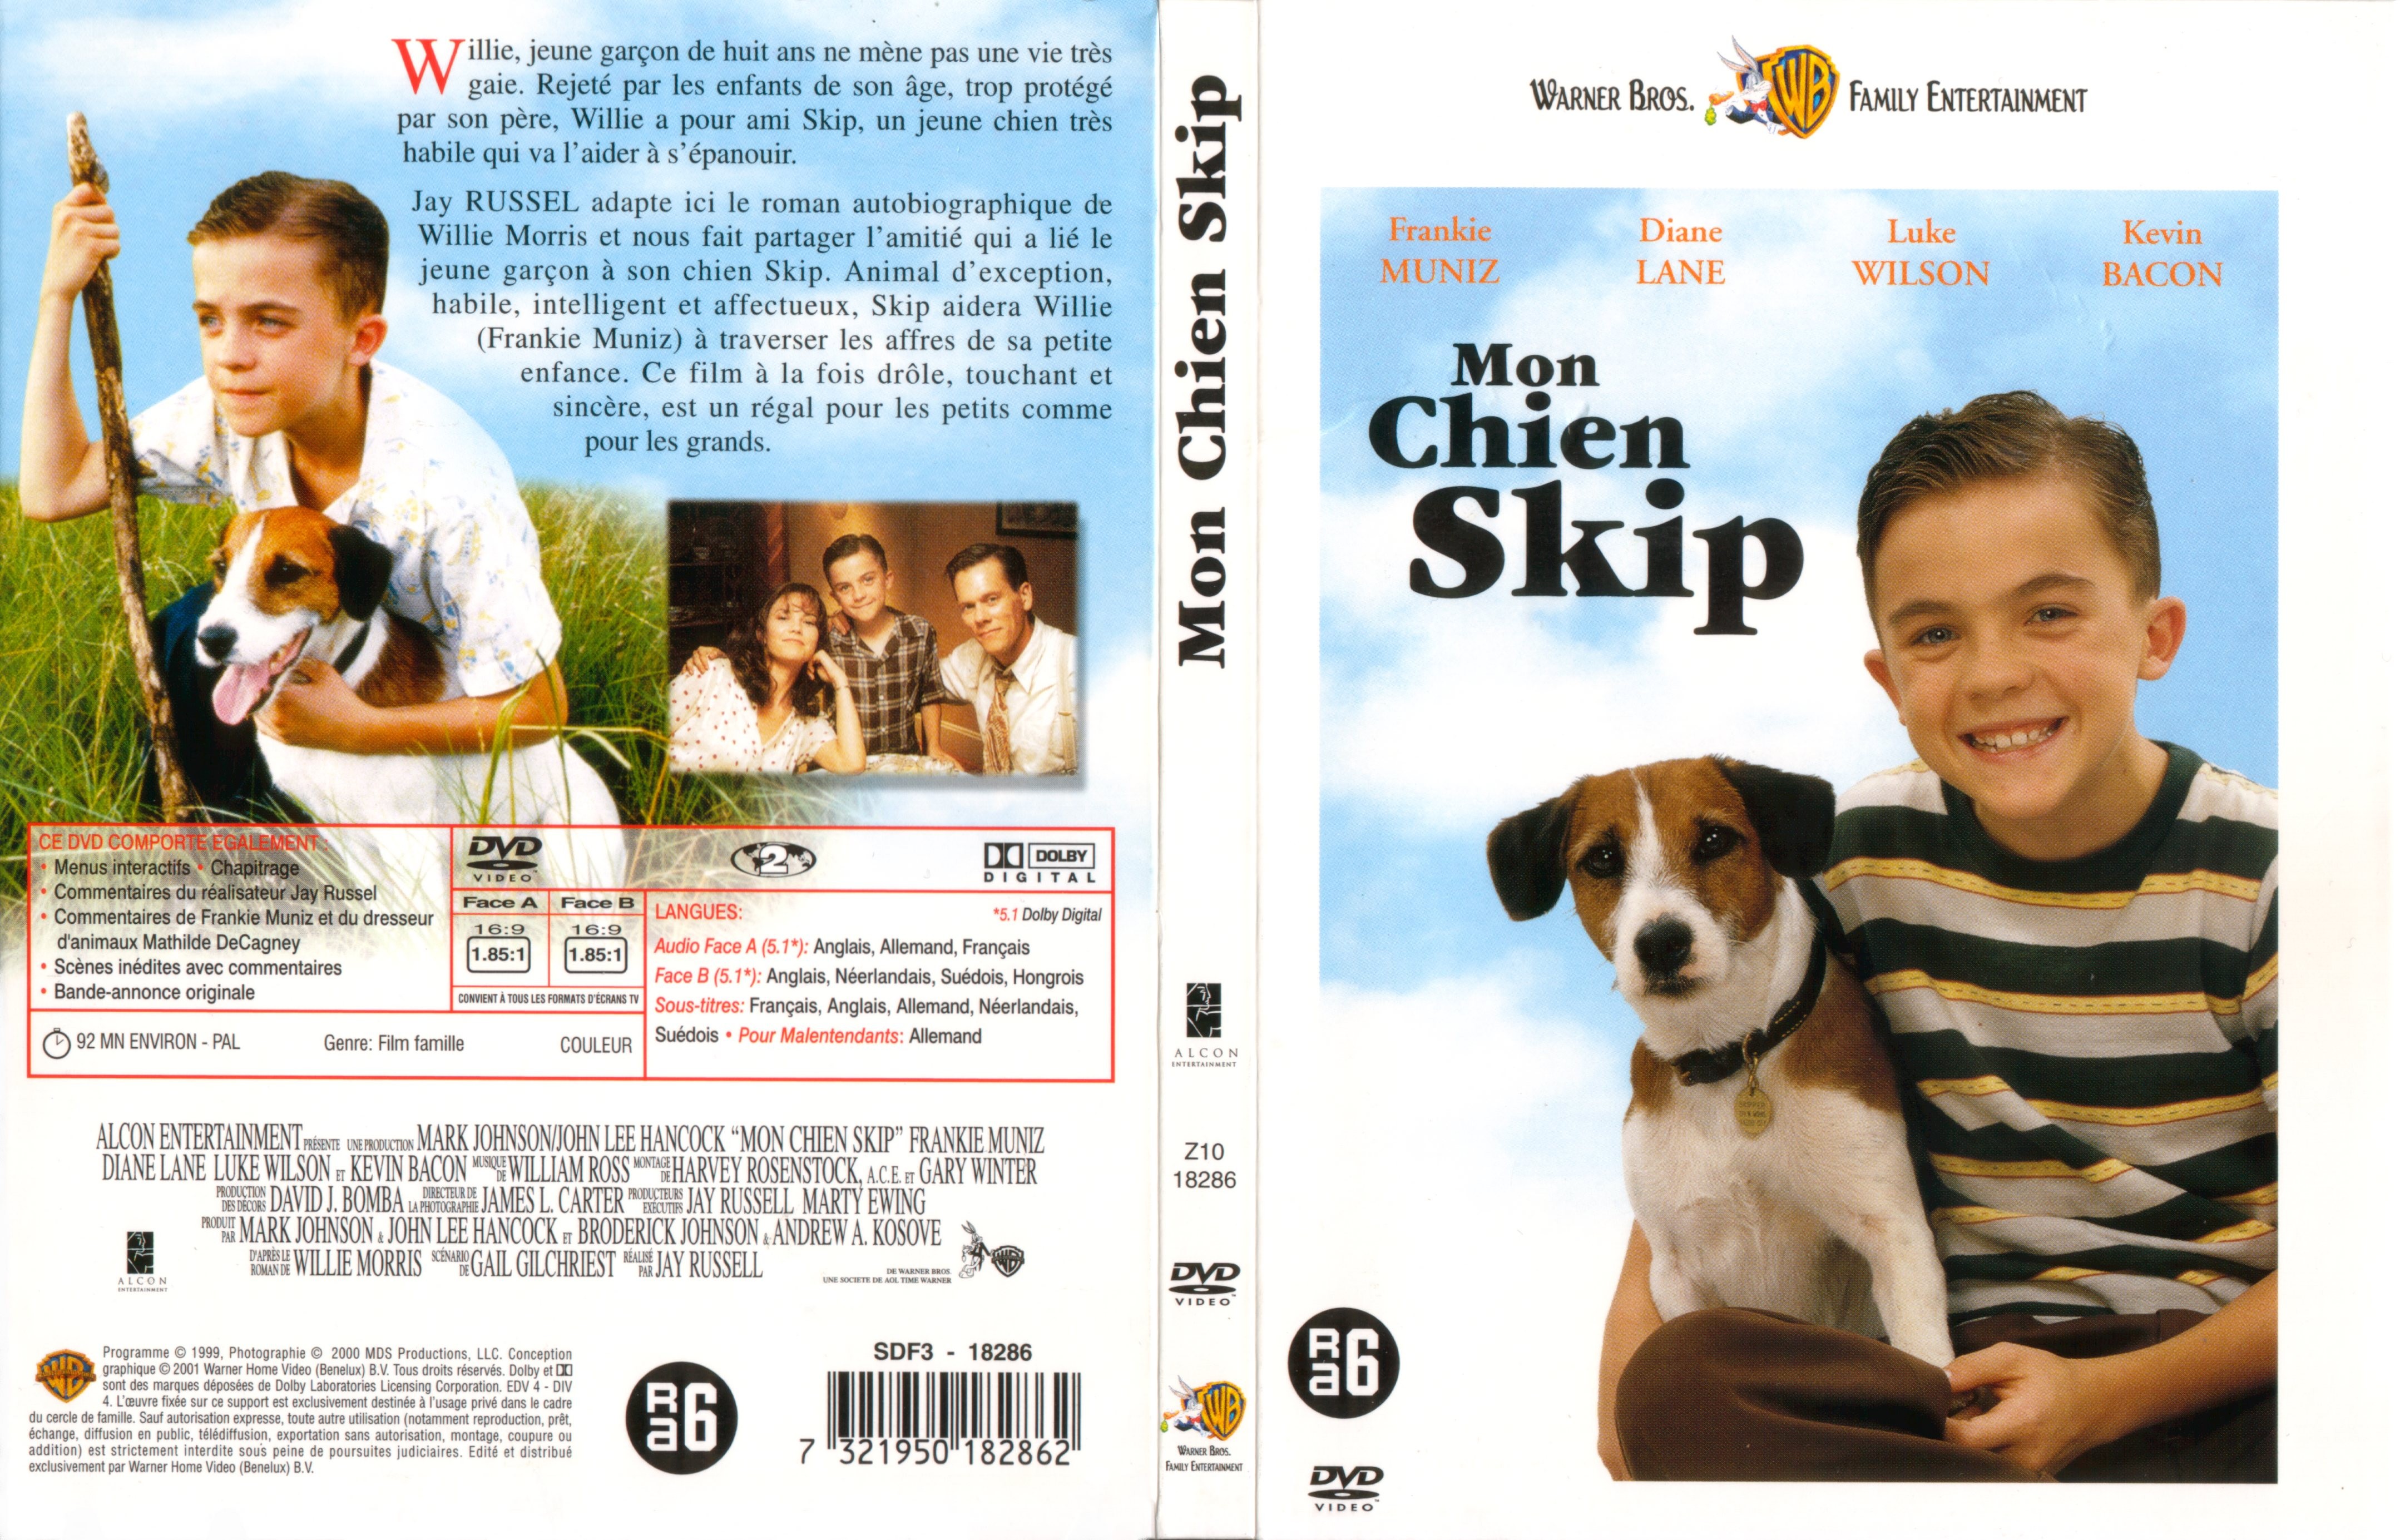 Jaquette DVD Mon chien skip v2